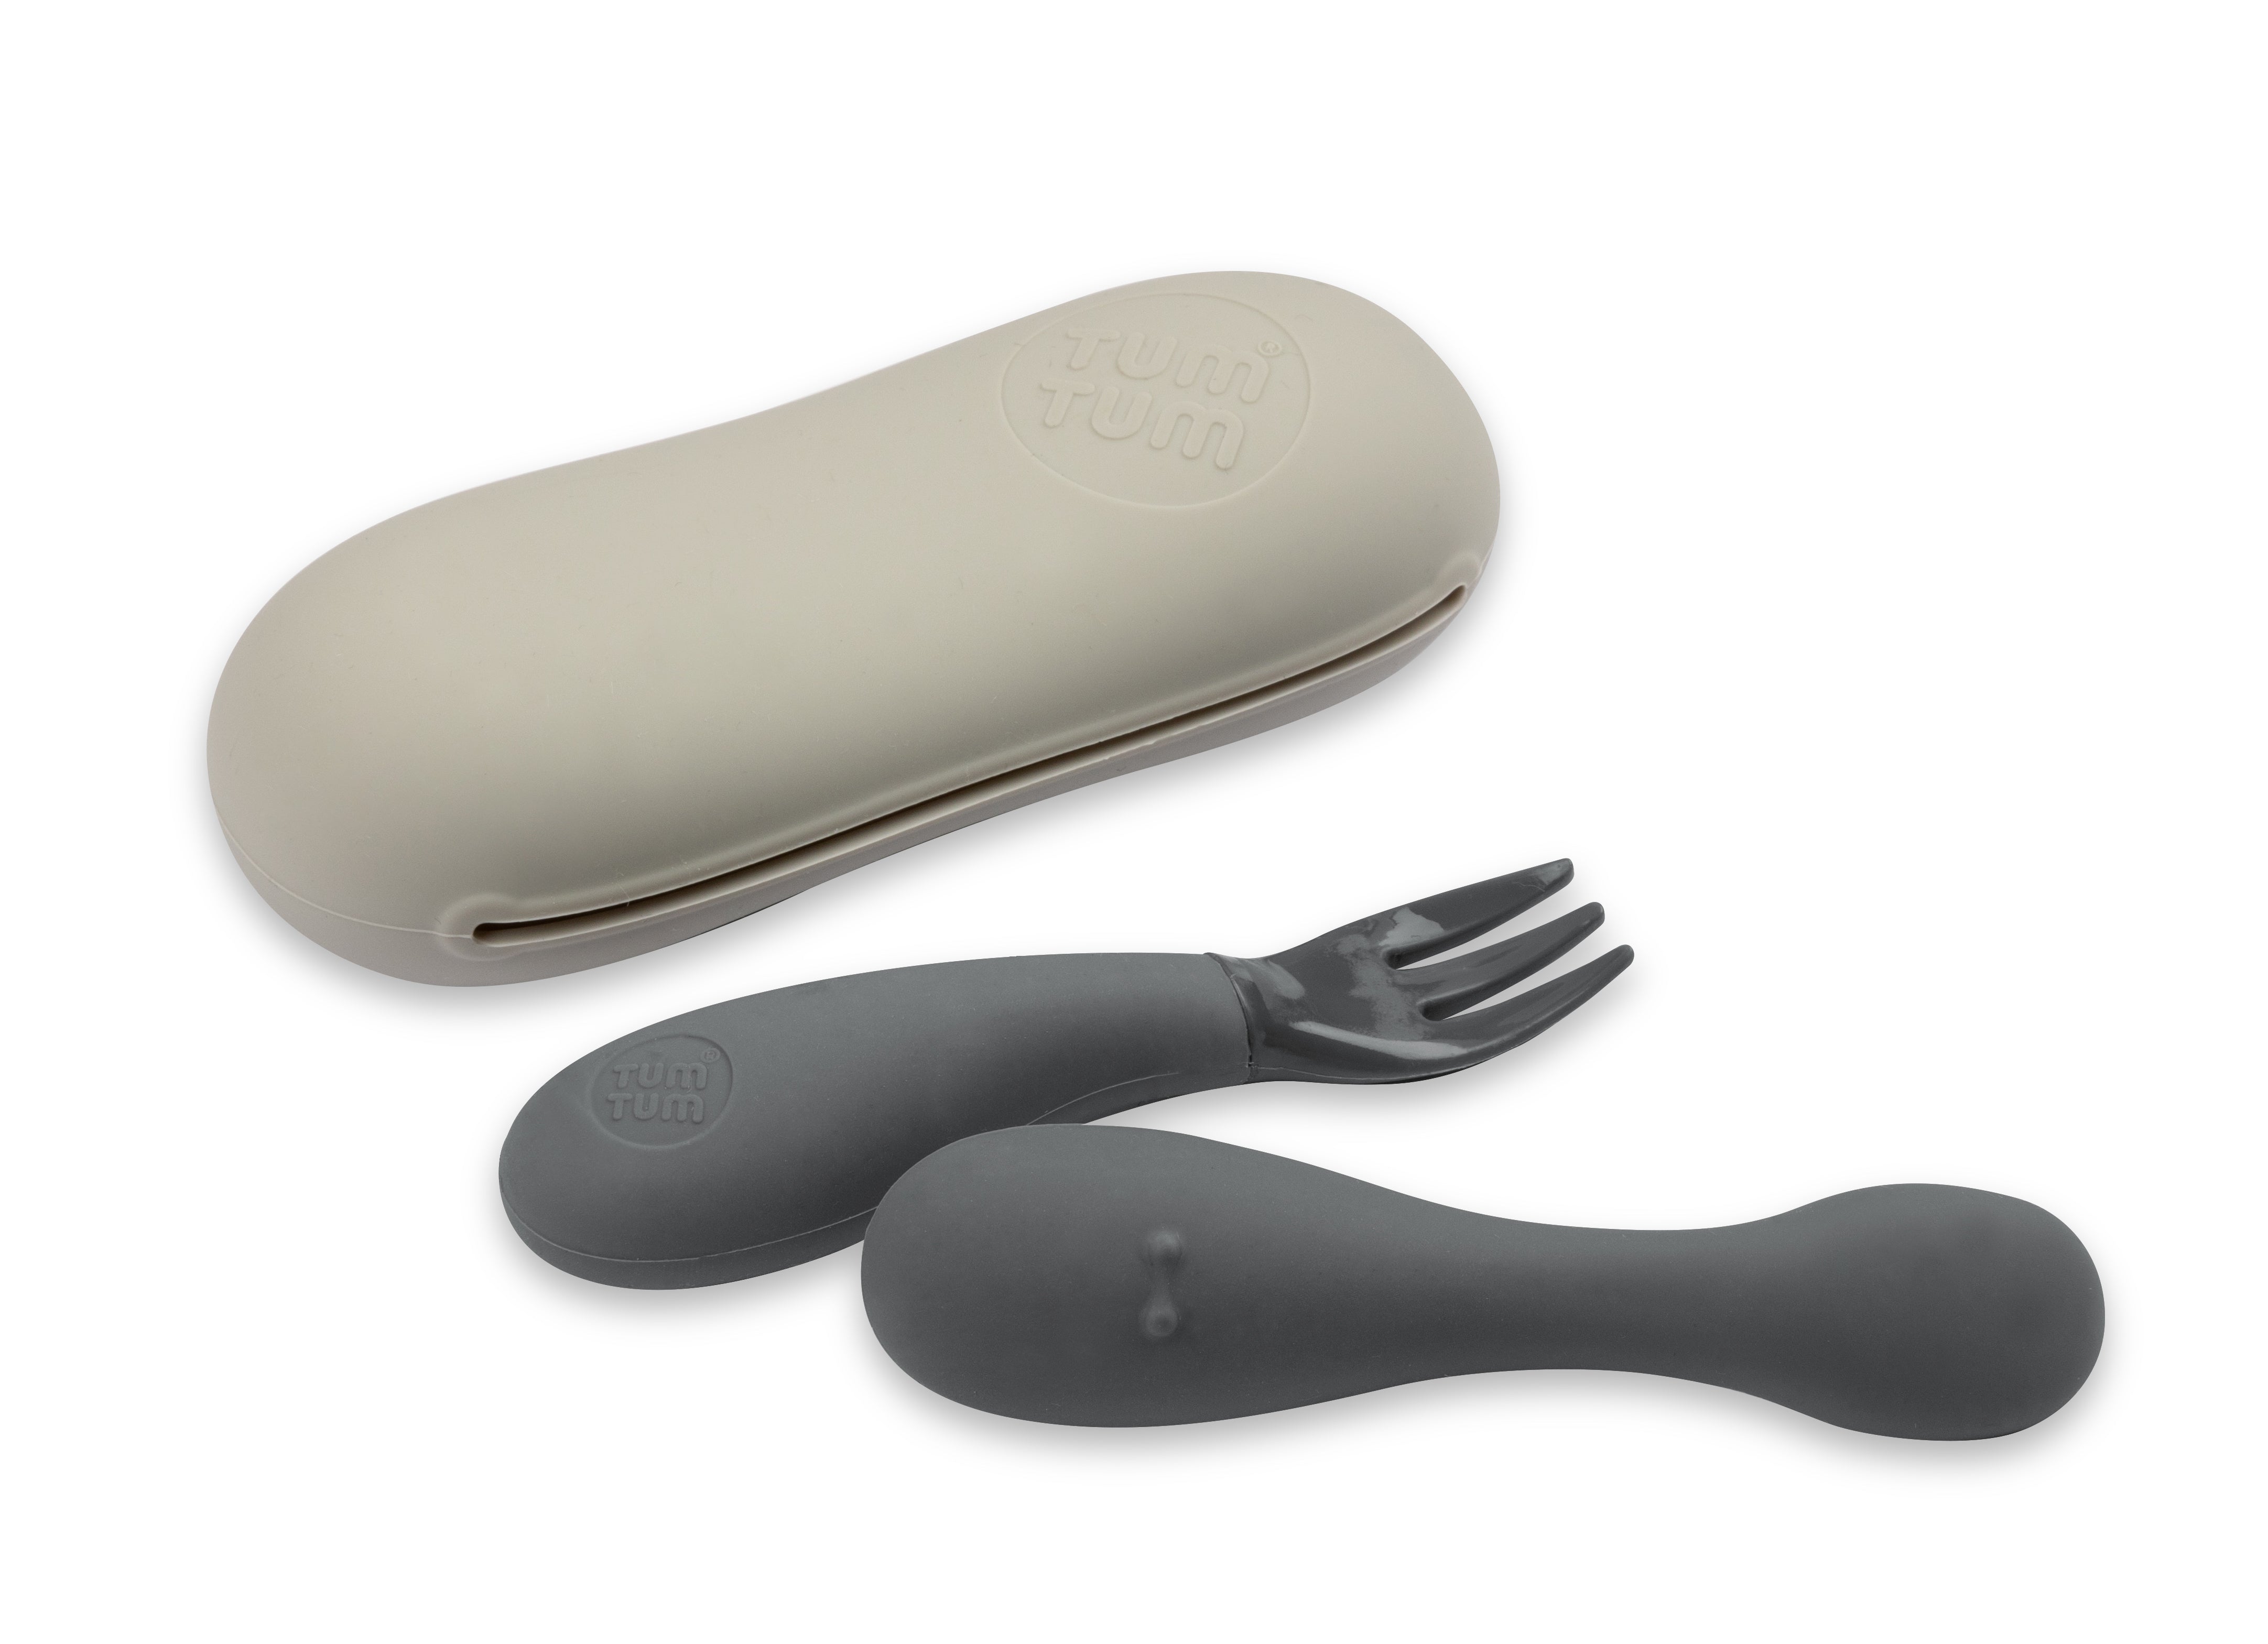 TUM TUM Baby Cutlery With Case, Baby Spoon & fork Set, Baby Cutlery For Babies, First Self Feeding Cutlery, 6m+,Grey